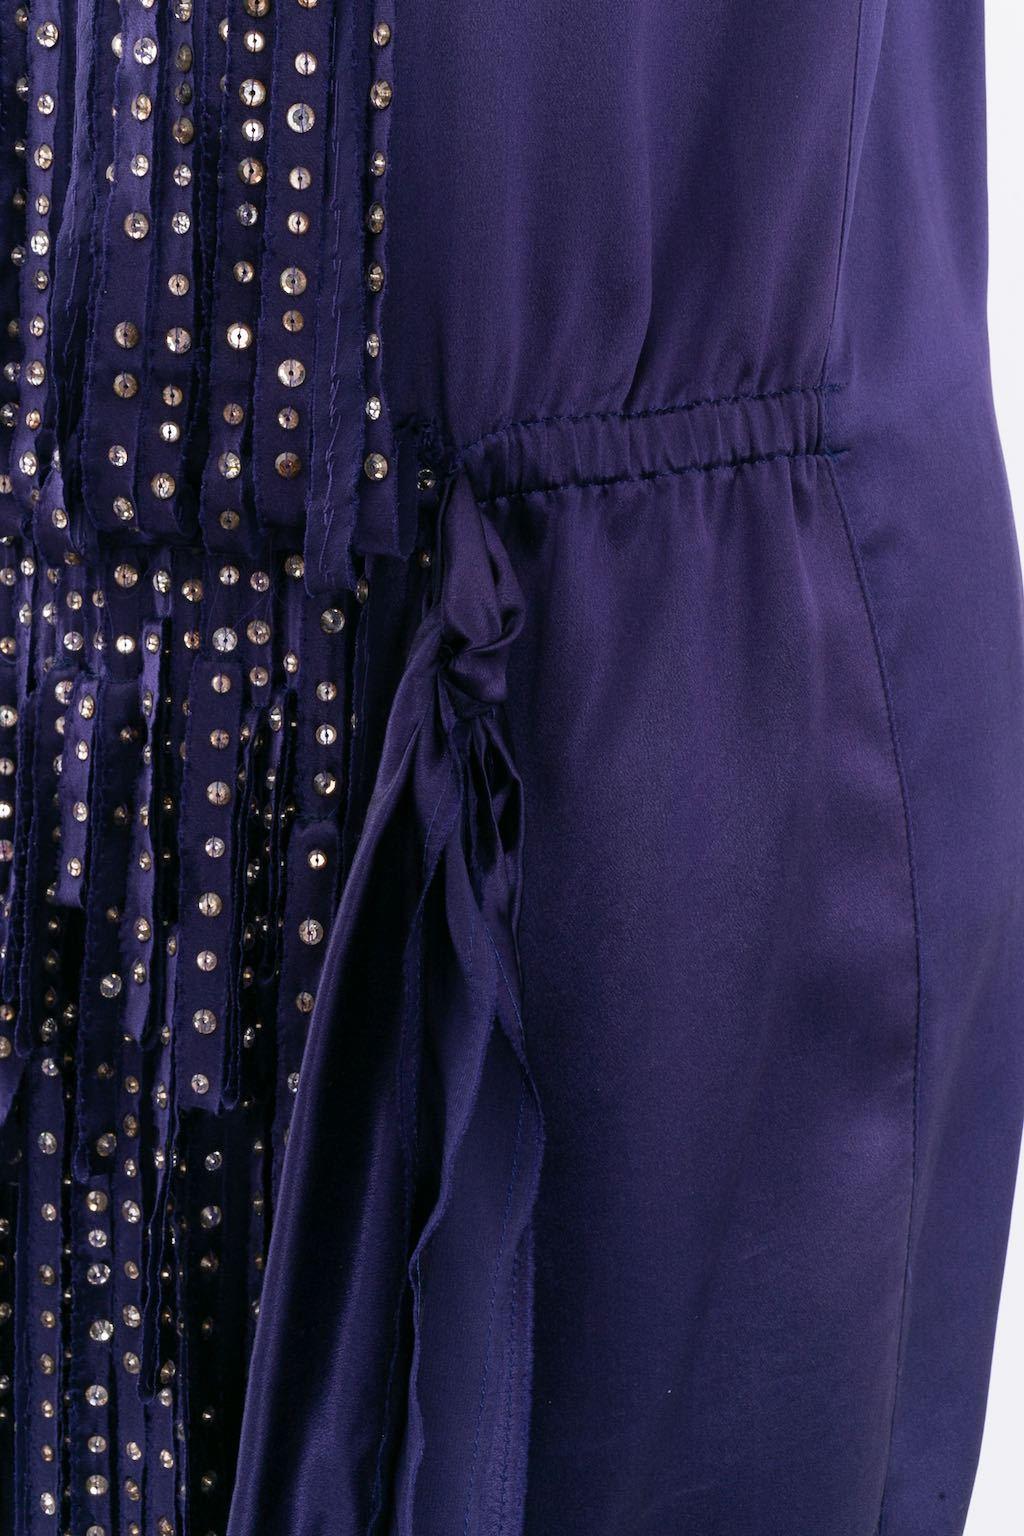 Lanvin Embellished Purple Silk Dress Winter Collection, 2004 For Sale 4